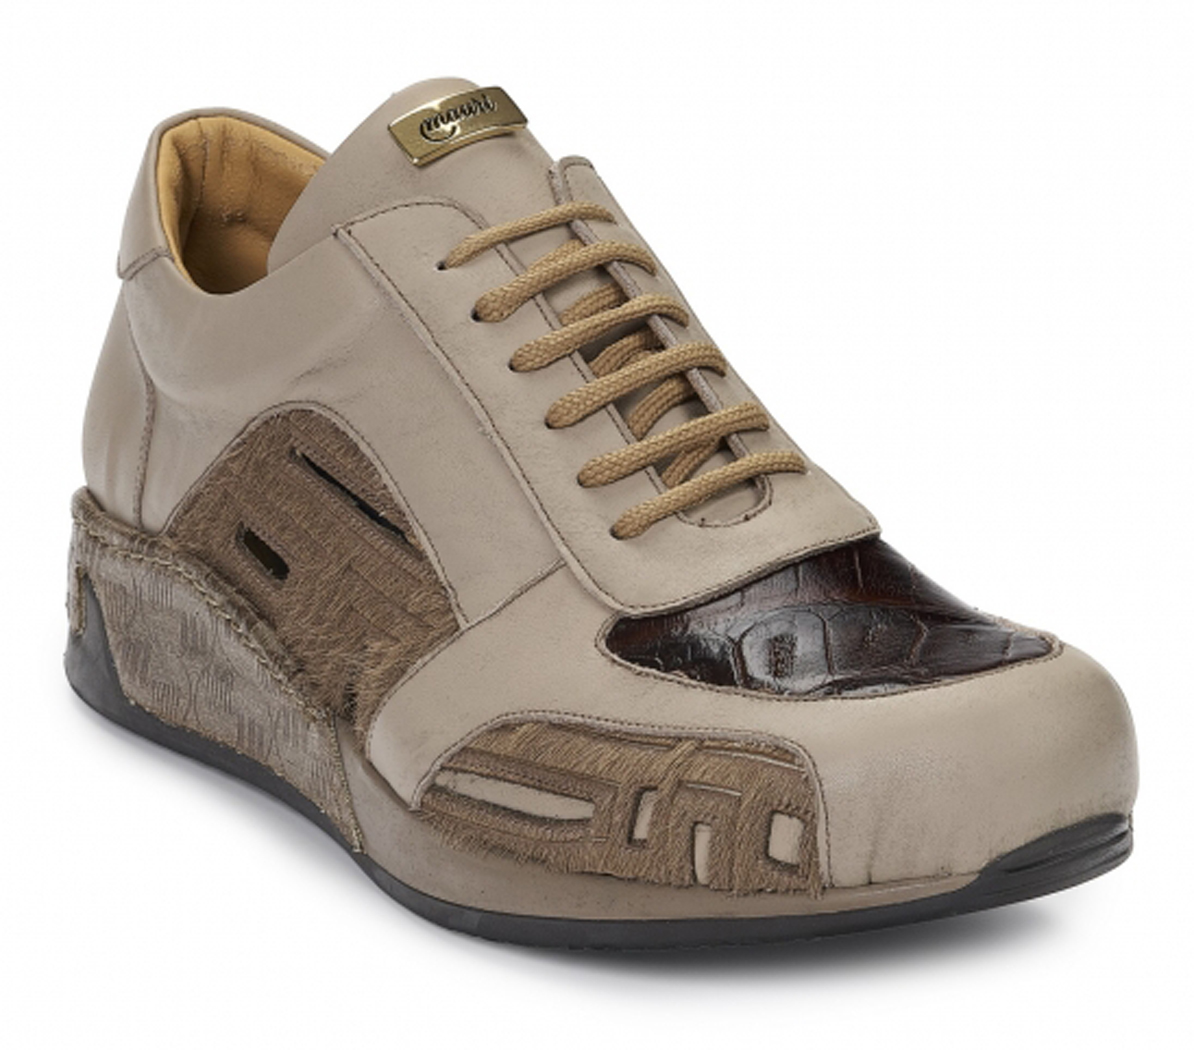 Mauri ''Tevere'' 8587 Sport Rust / Perforated Brown / Genuine Nappa / Baby Crocodile / Pony Casual Sneakers.